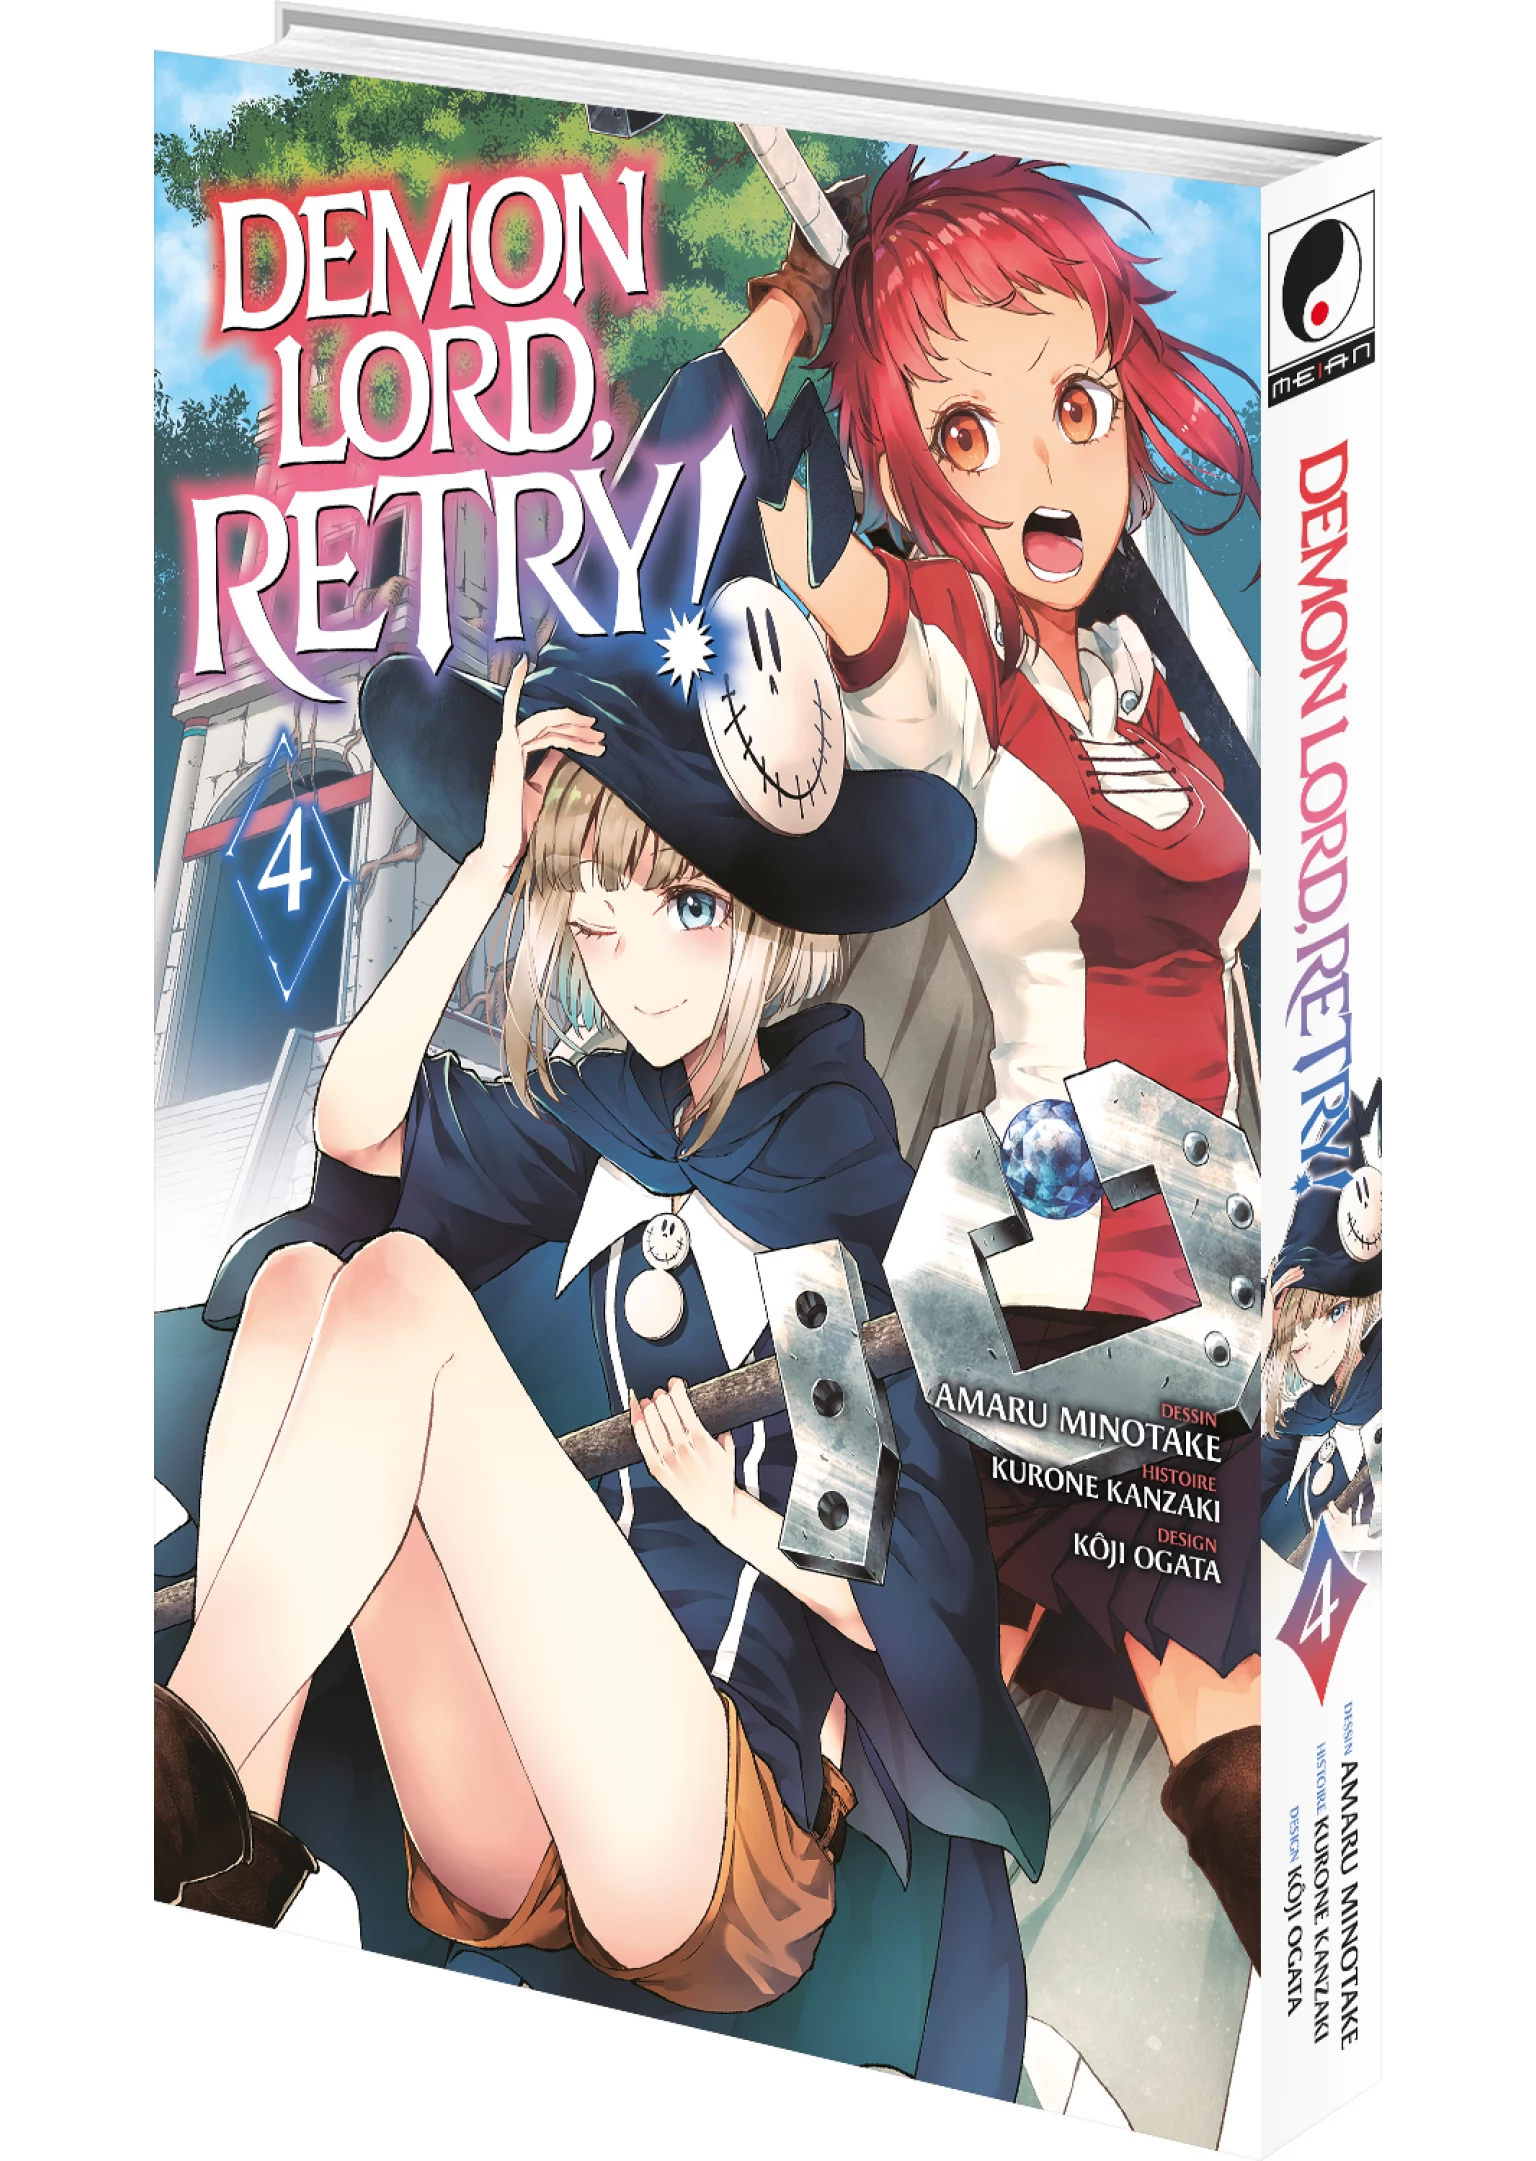 Demon Lord, Retry! - Tome 5 - Livre (Manga) - Meian - Kurone